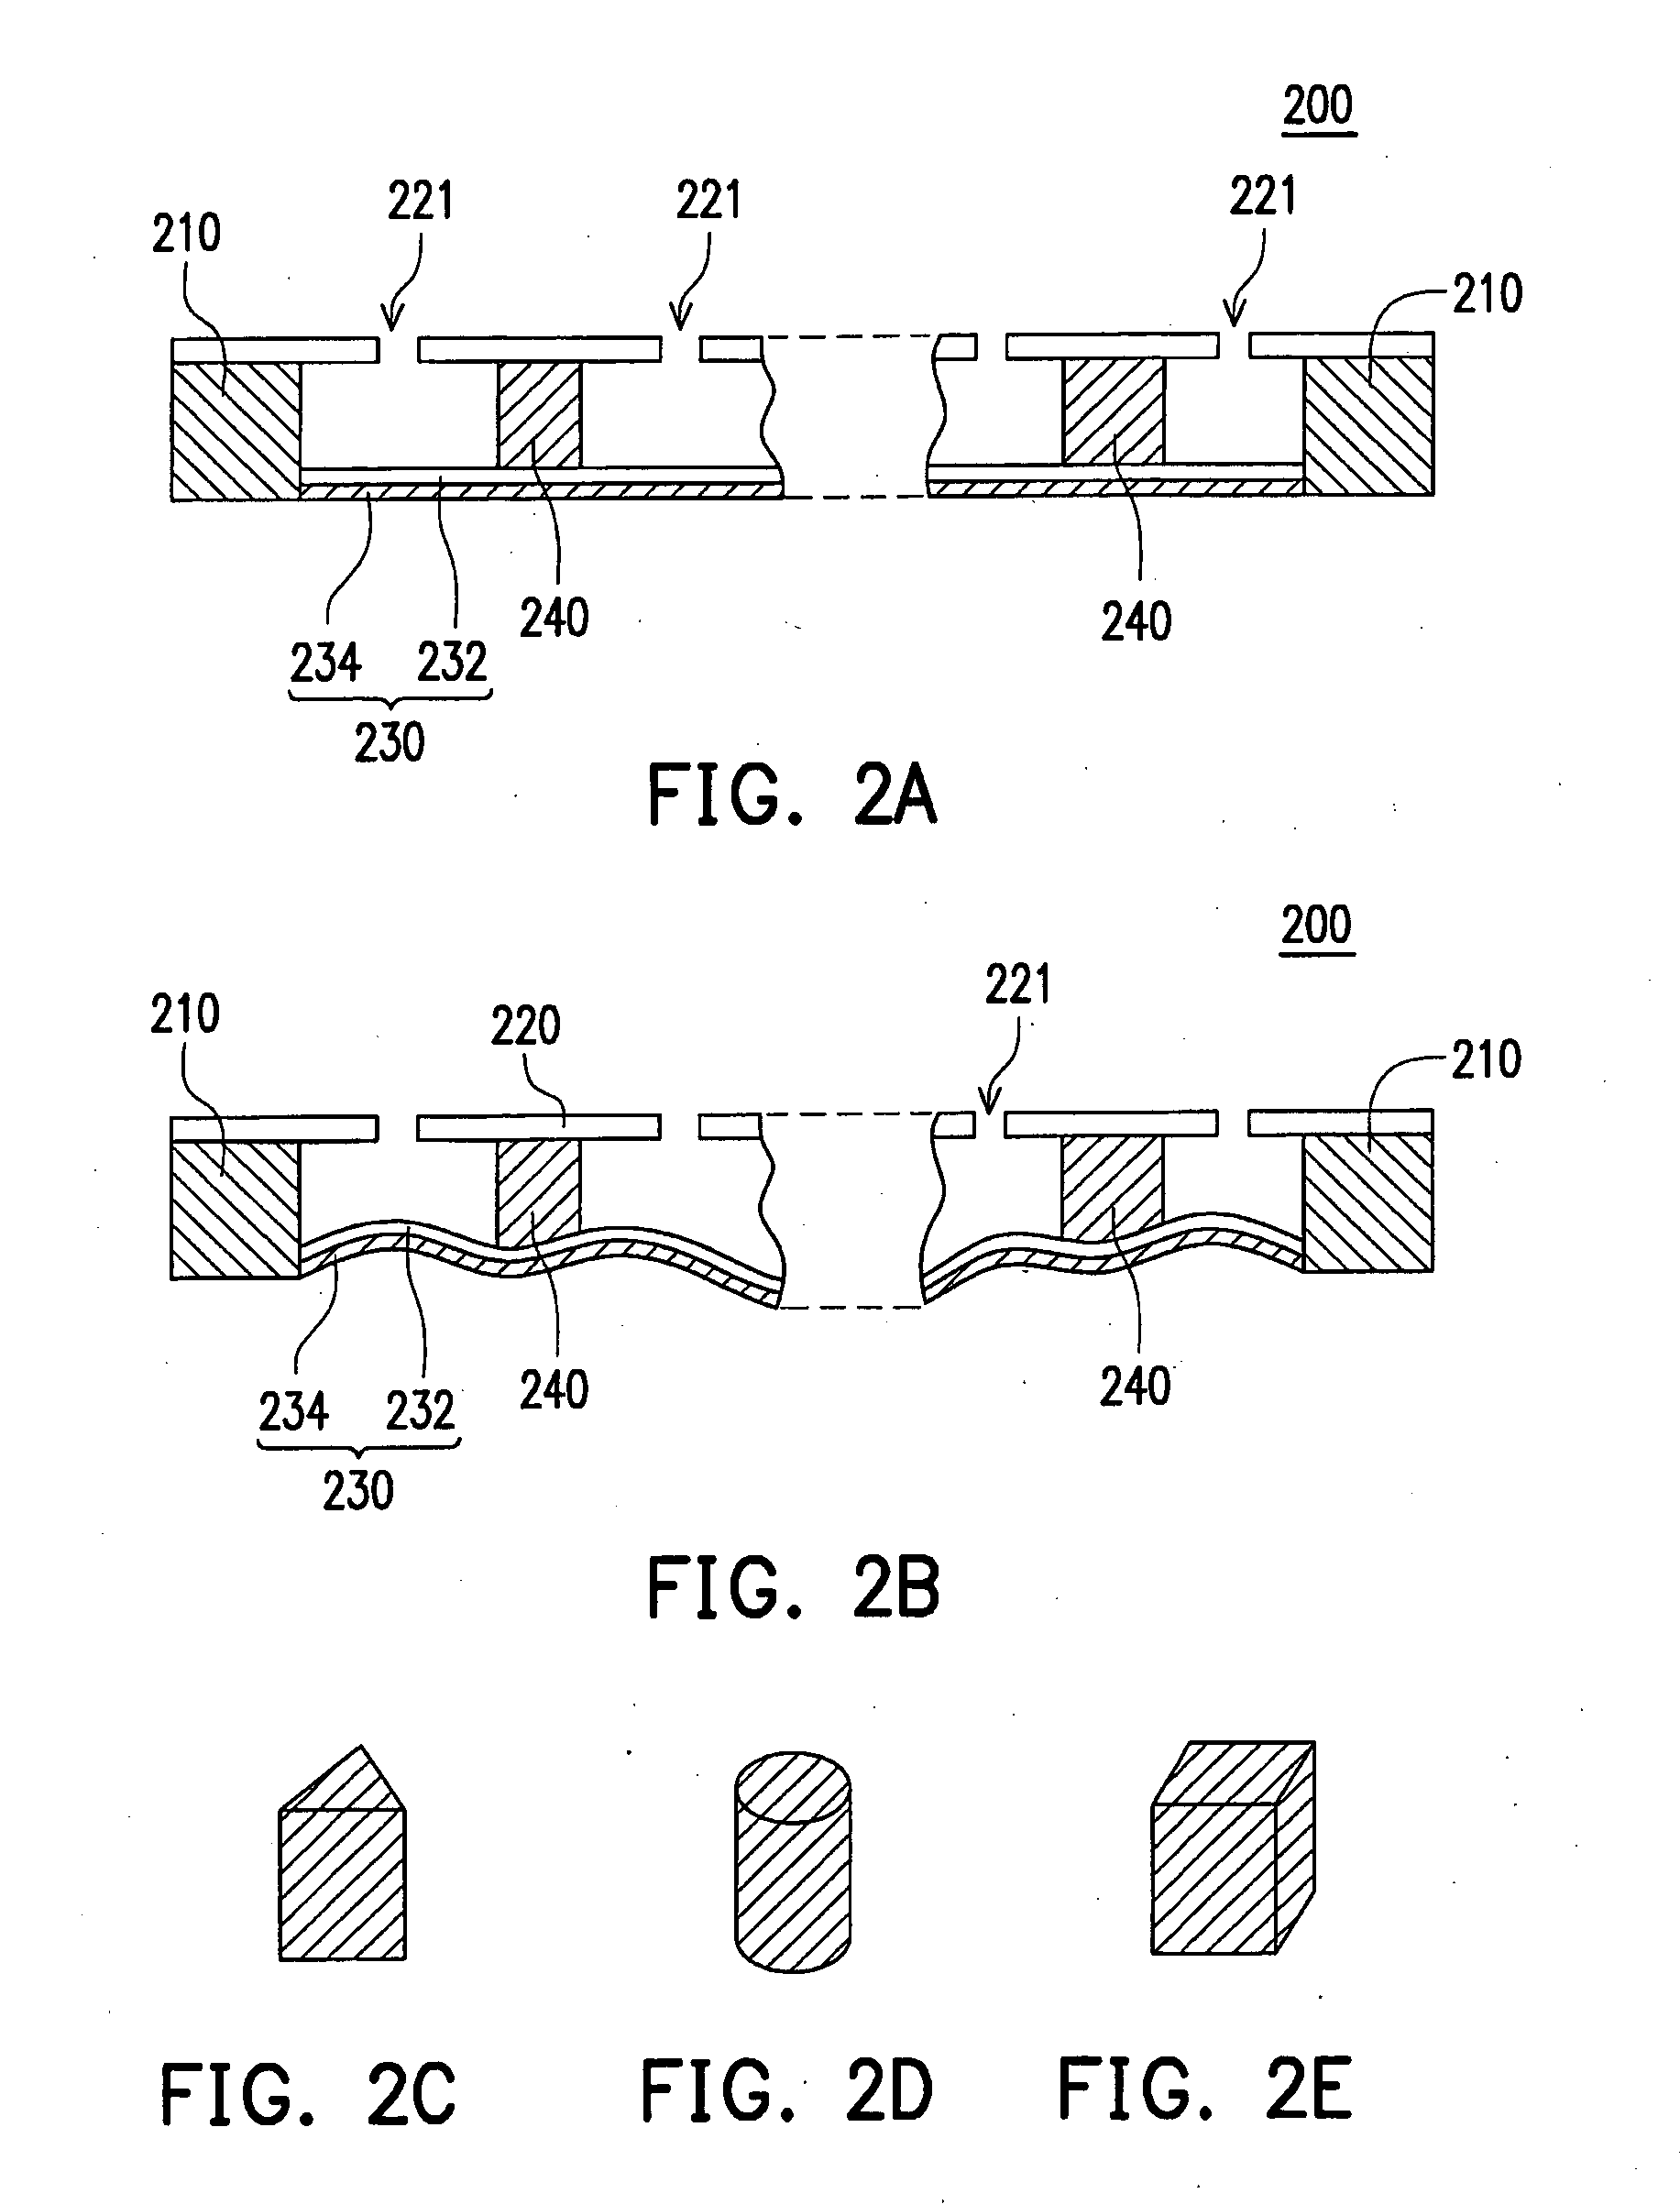 Structure and manufactruring method of electrostatic speaker